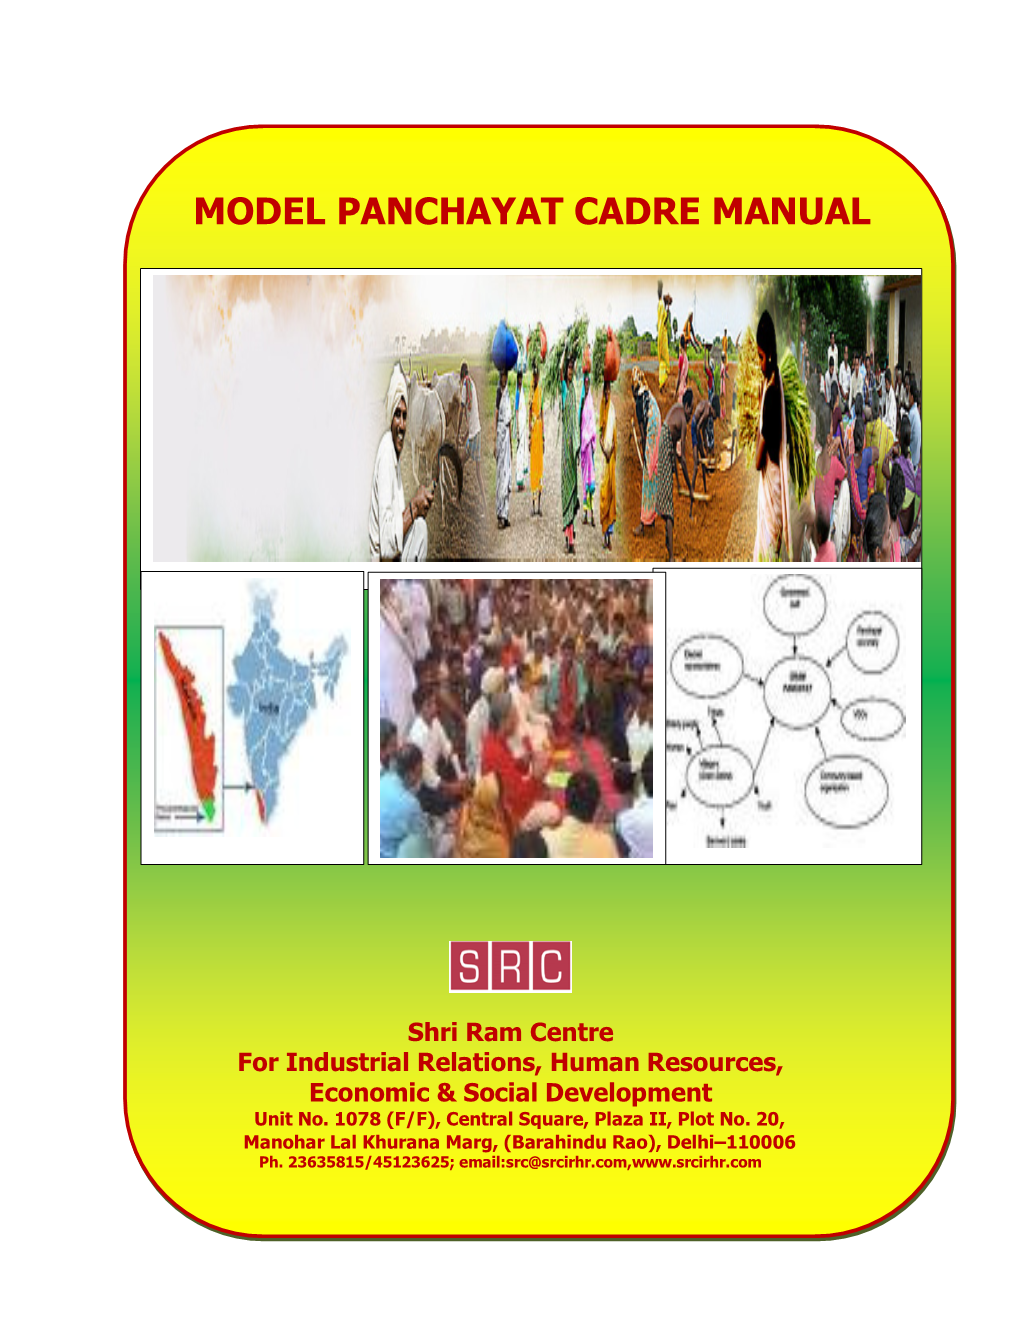 Model Panchayat Cadre Manual